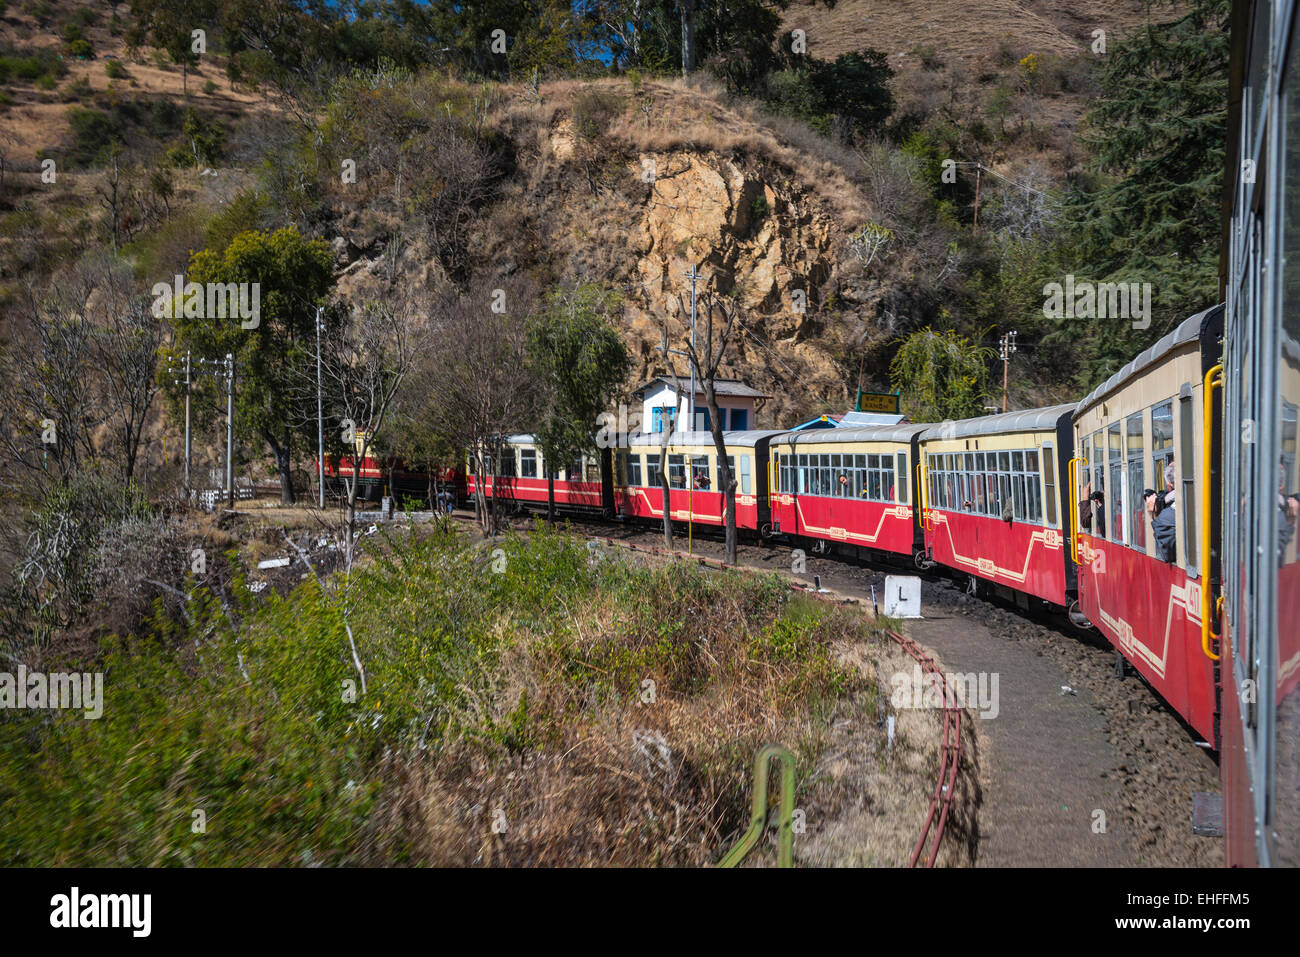 The narrow gauge Kalka-Shimla train winding down through the Himalayan foothills in India Stock Photo